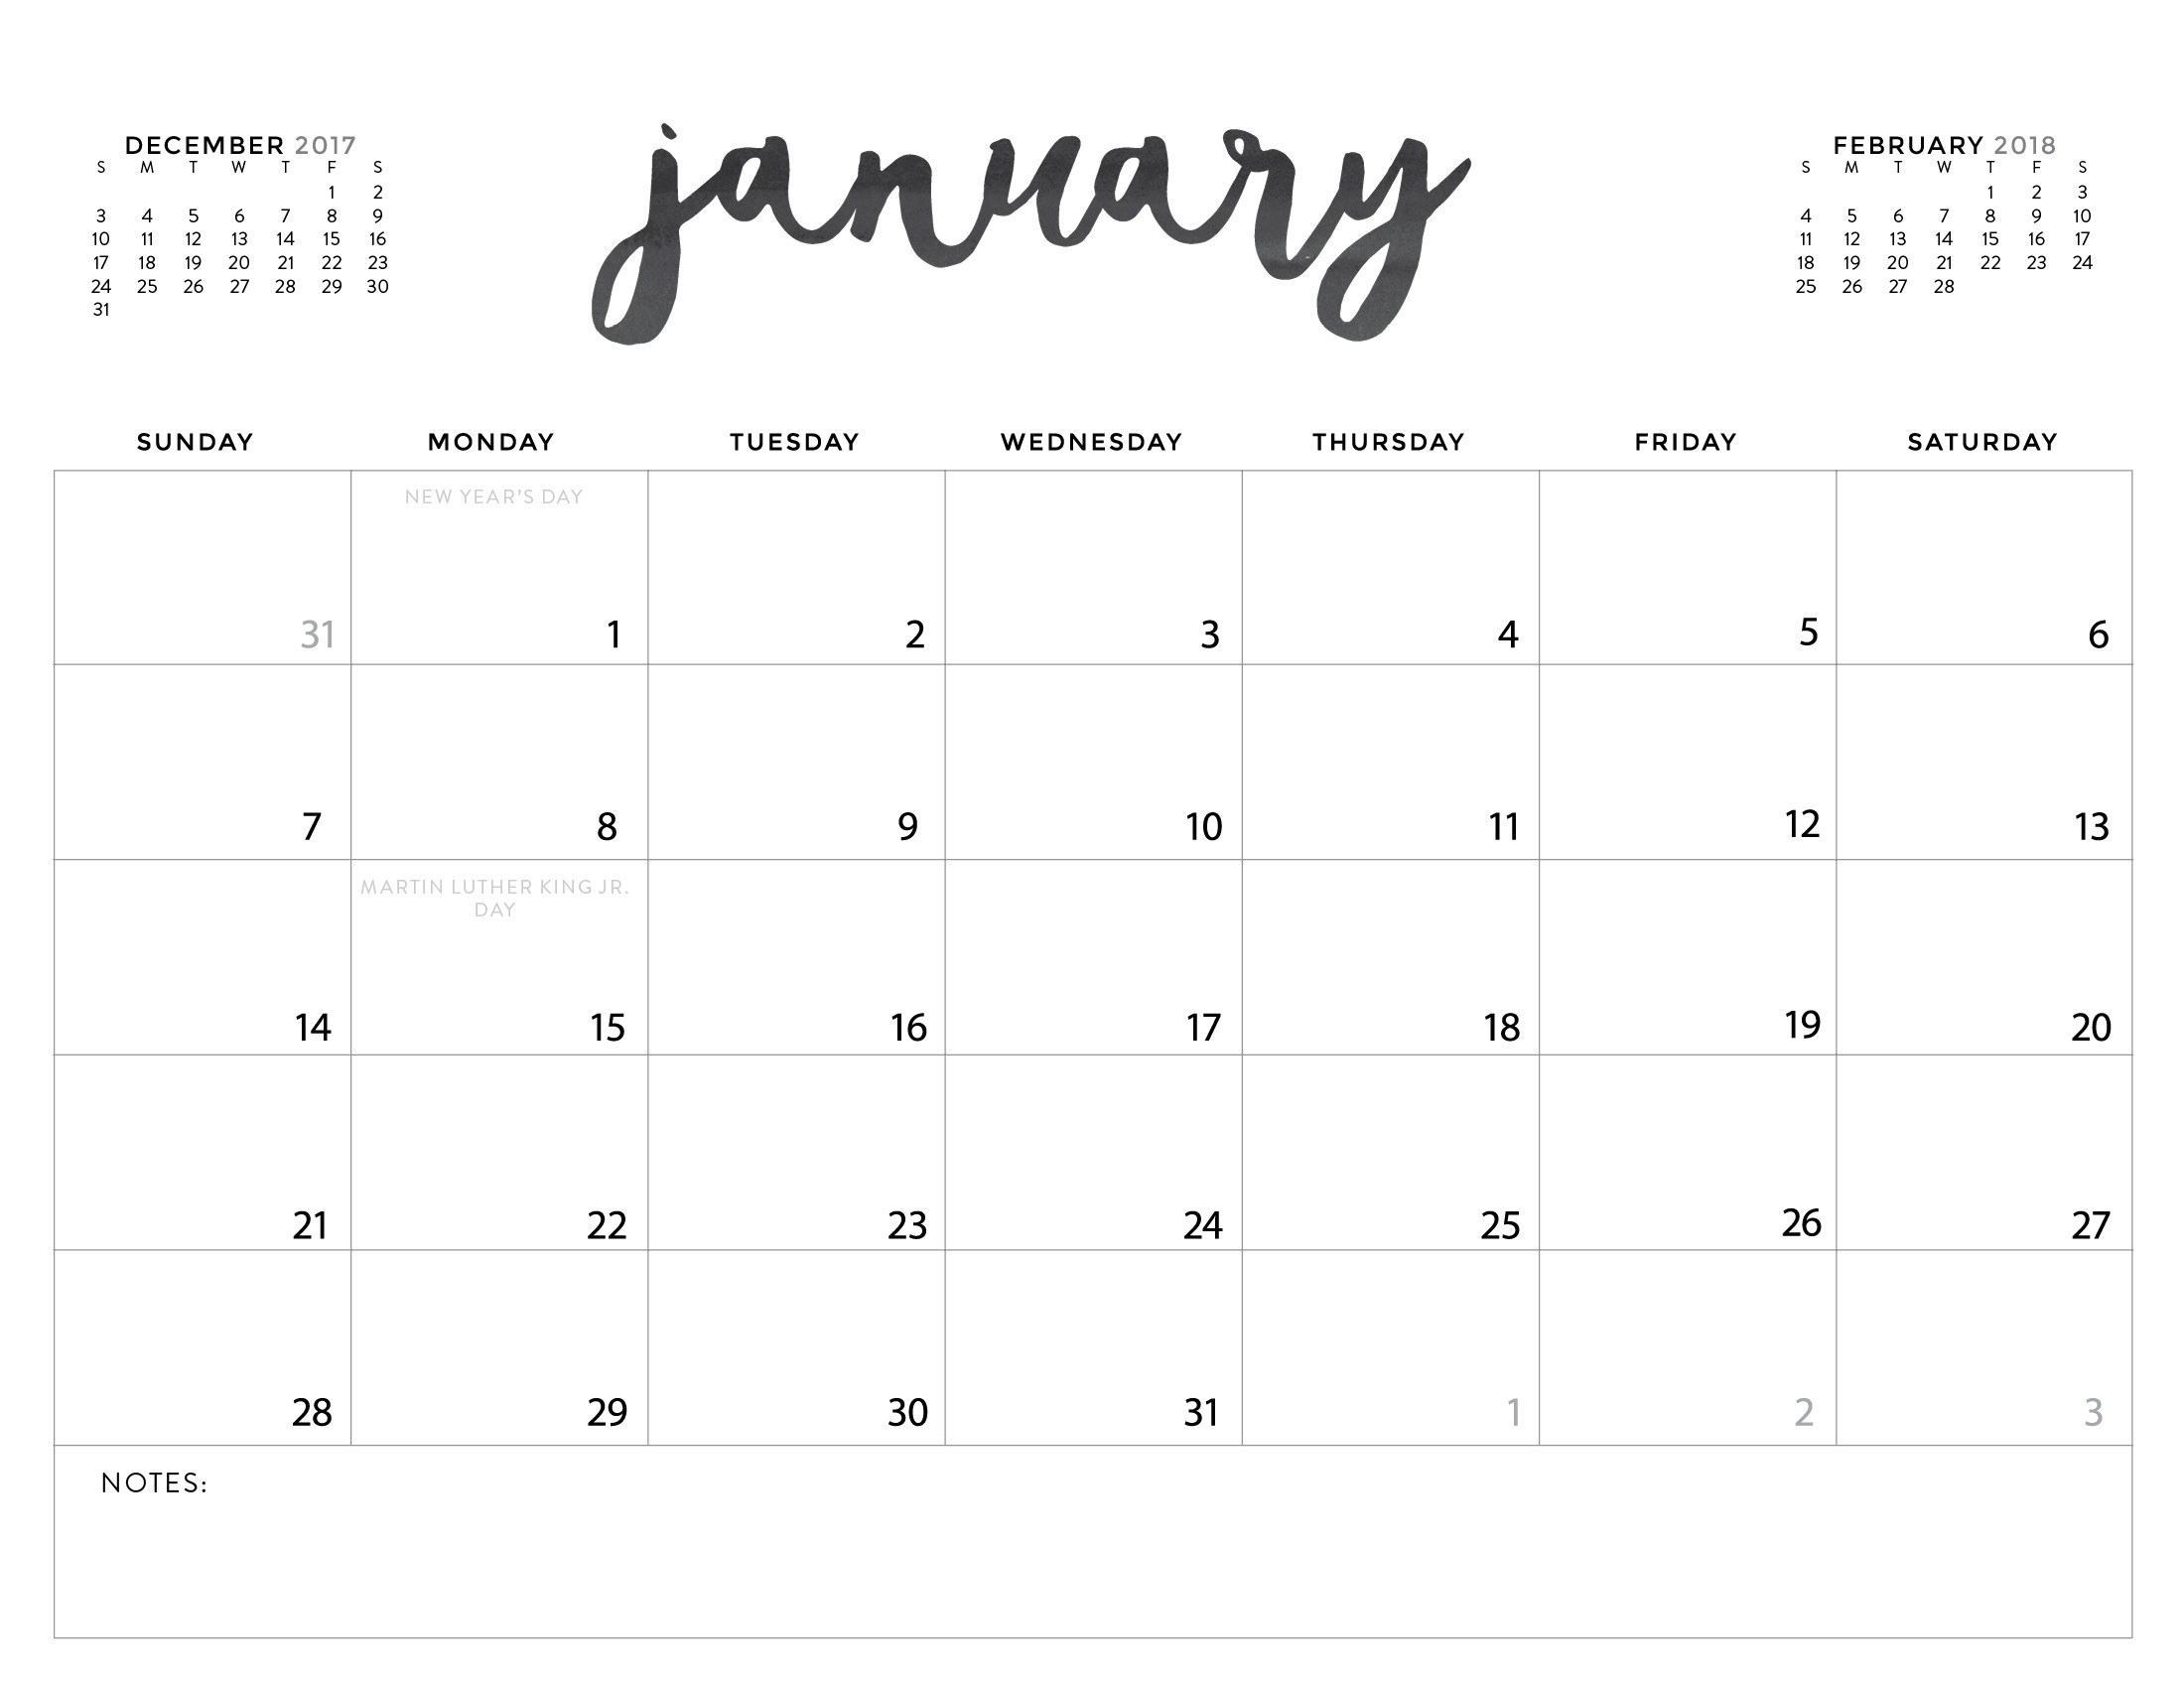 Academic Calendar Templates for 2016 2017